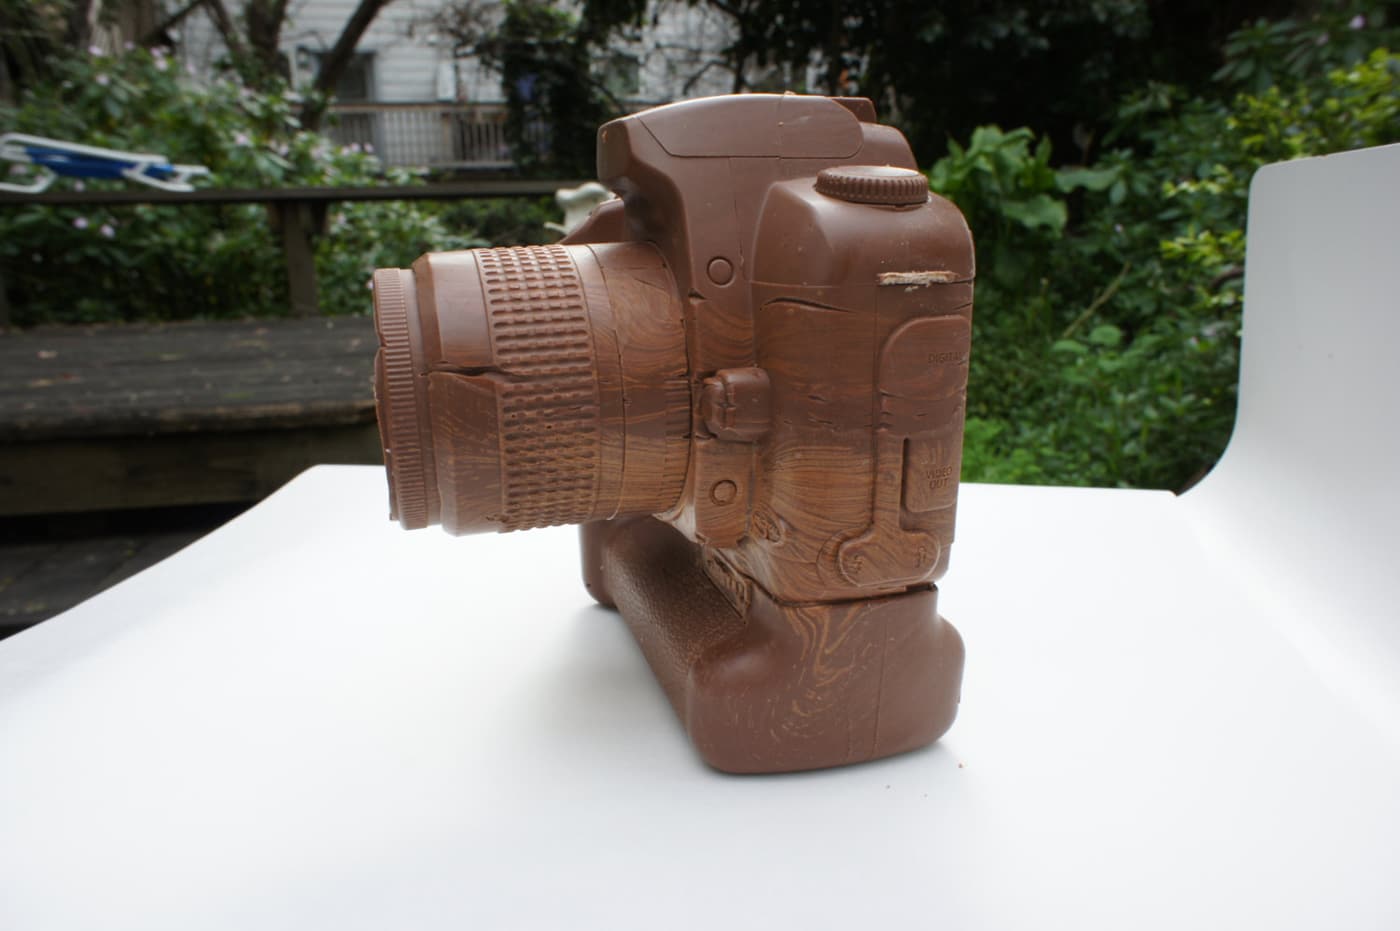 chocolate-canon-d60-camera